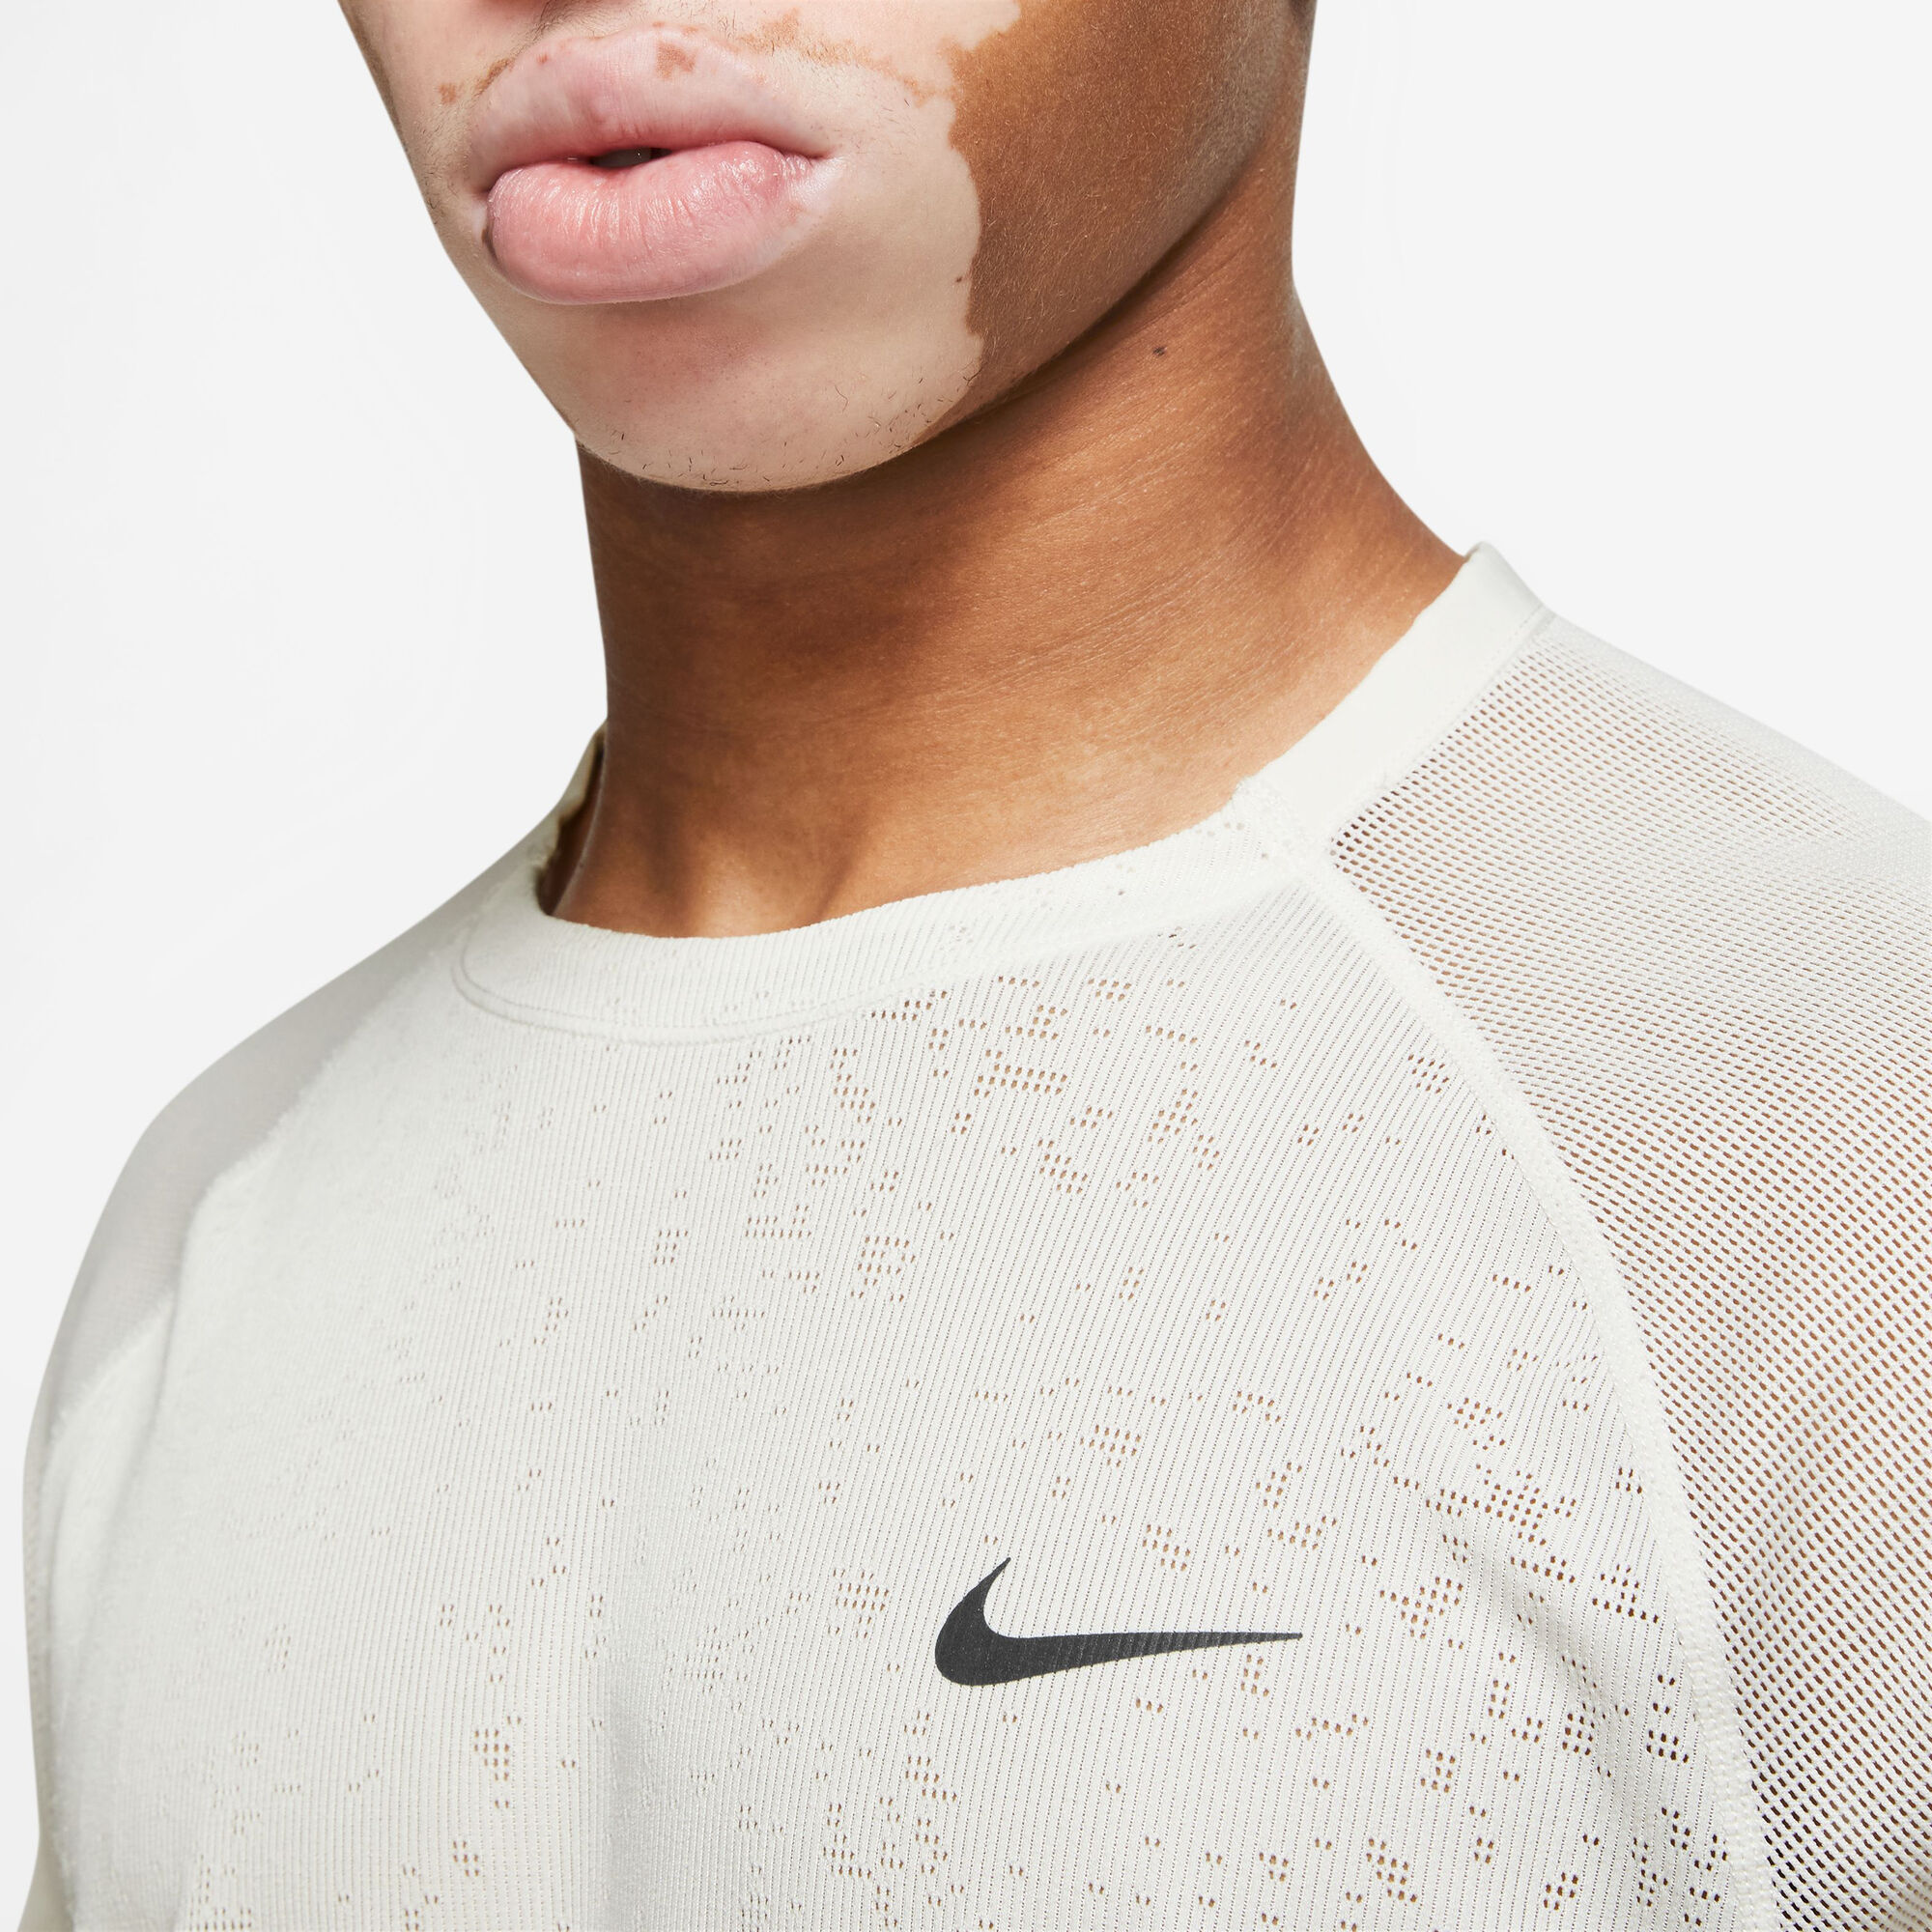 Tranquilidad de espíritu Innecesario frio buy Nike Dri-Fit Advantage Run Divine Techknit Running Shirts Men - White  online | Running Point